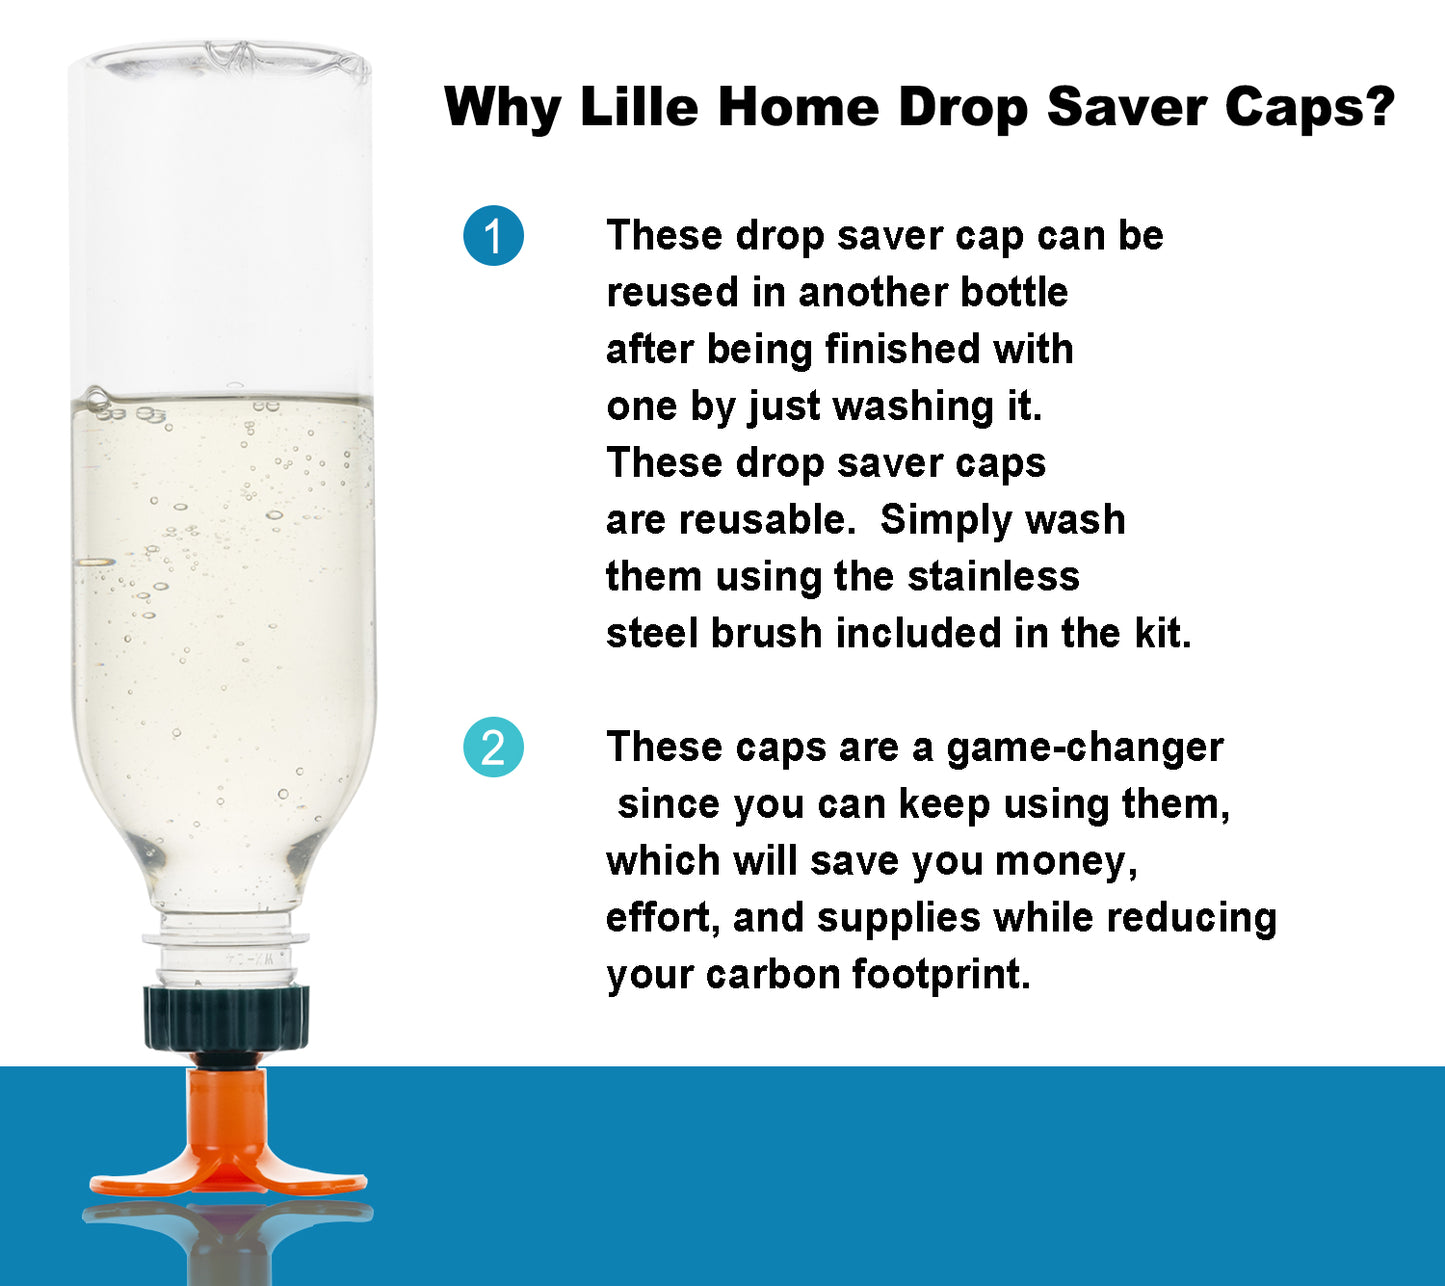 Lille Home Drop Saver Caps